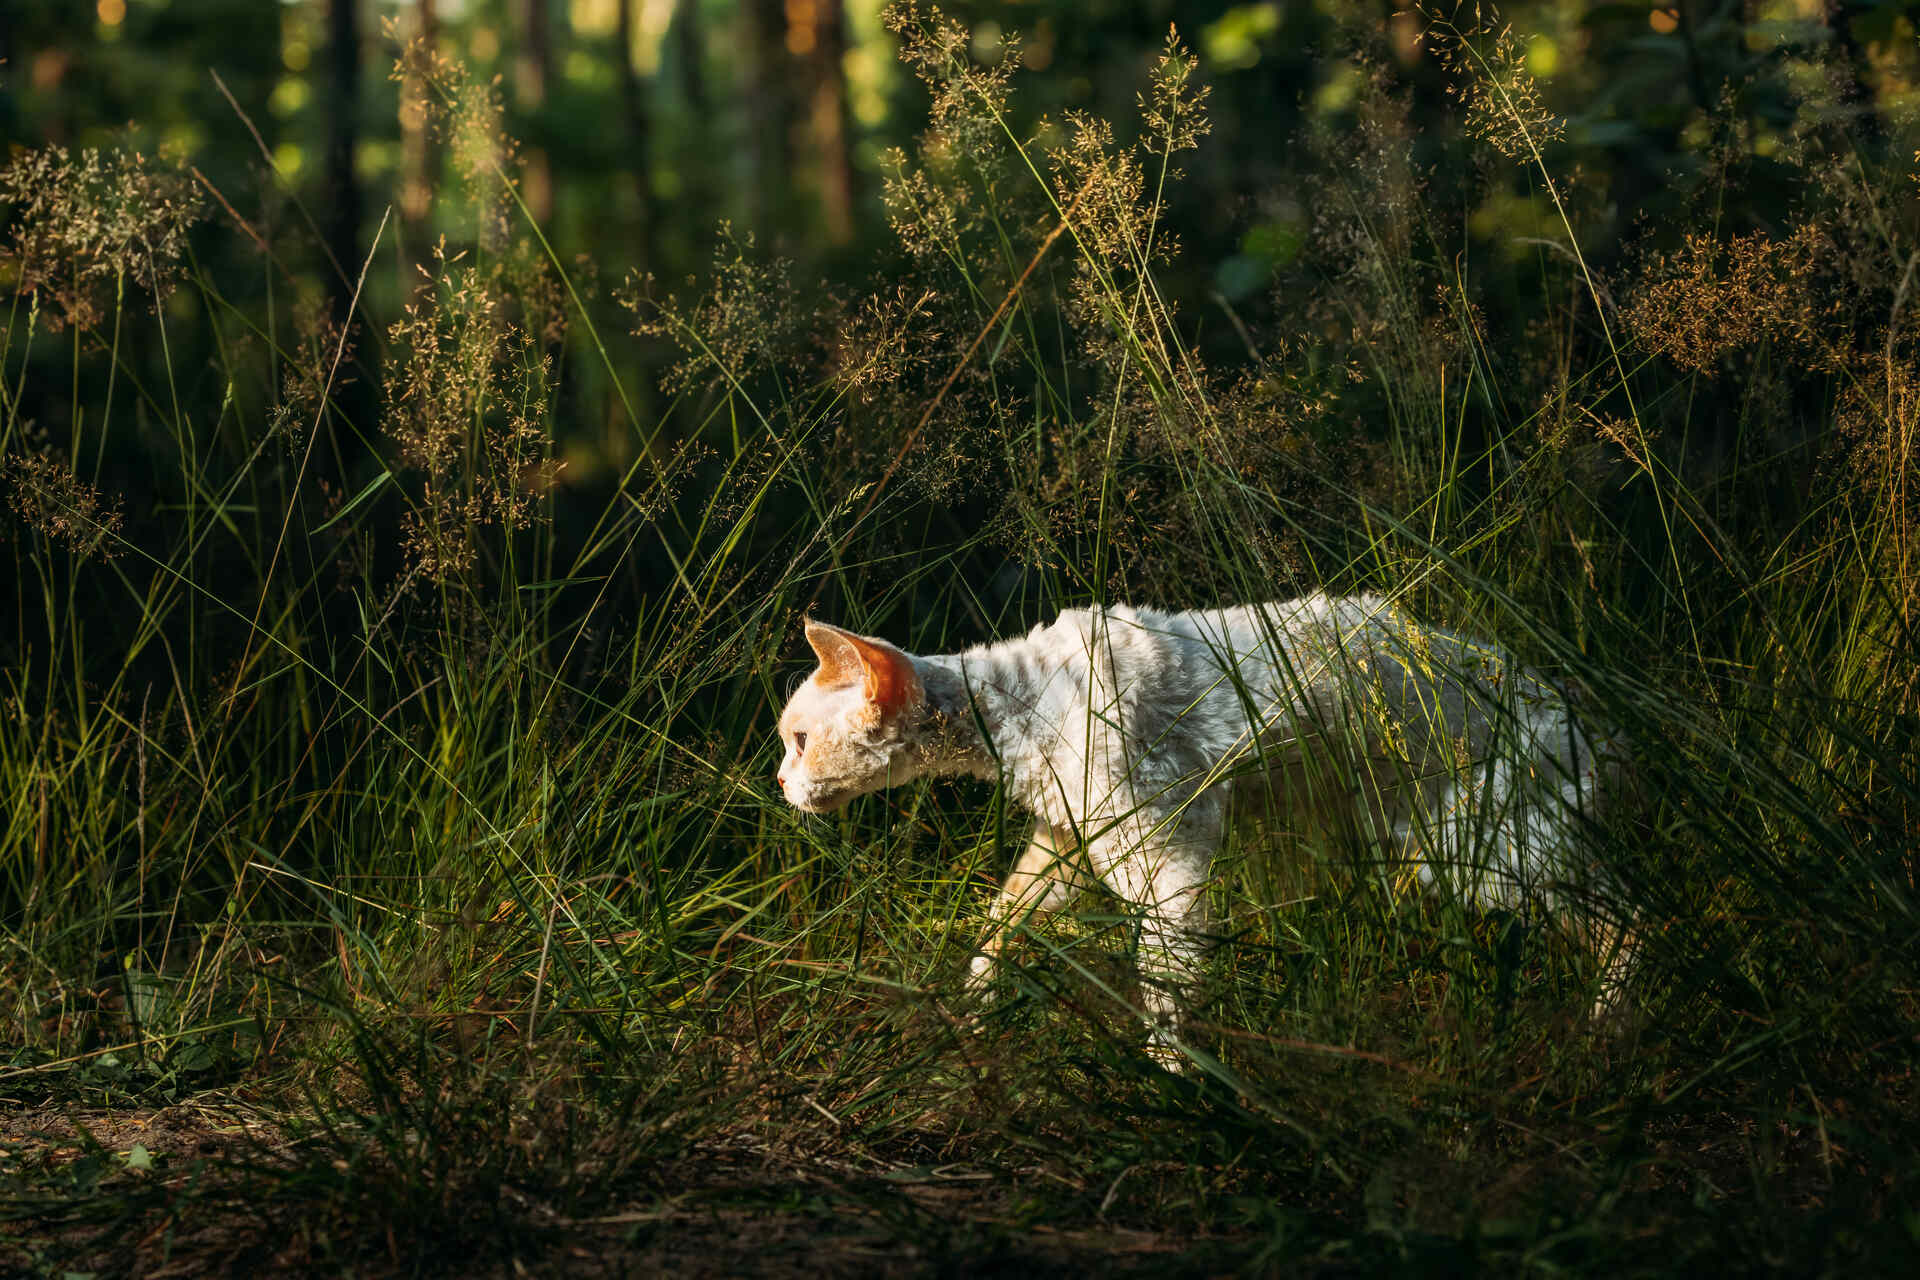 An outdoor cat stalking its prey